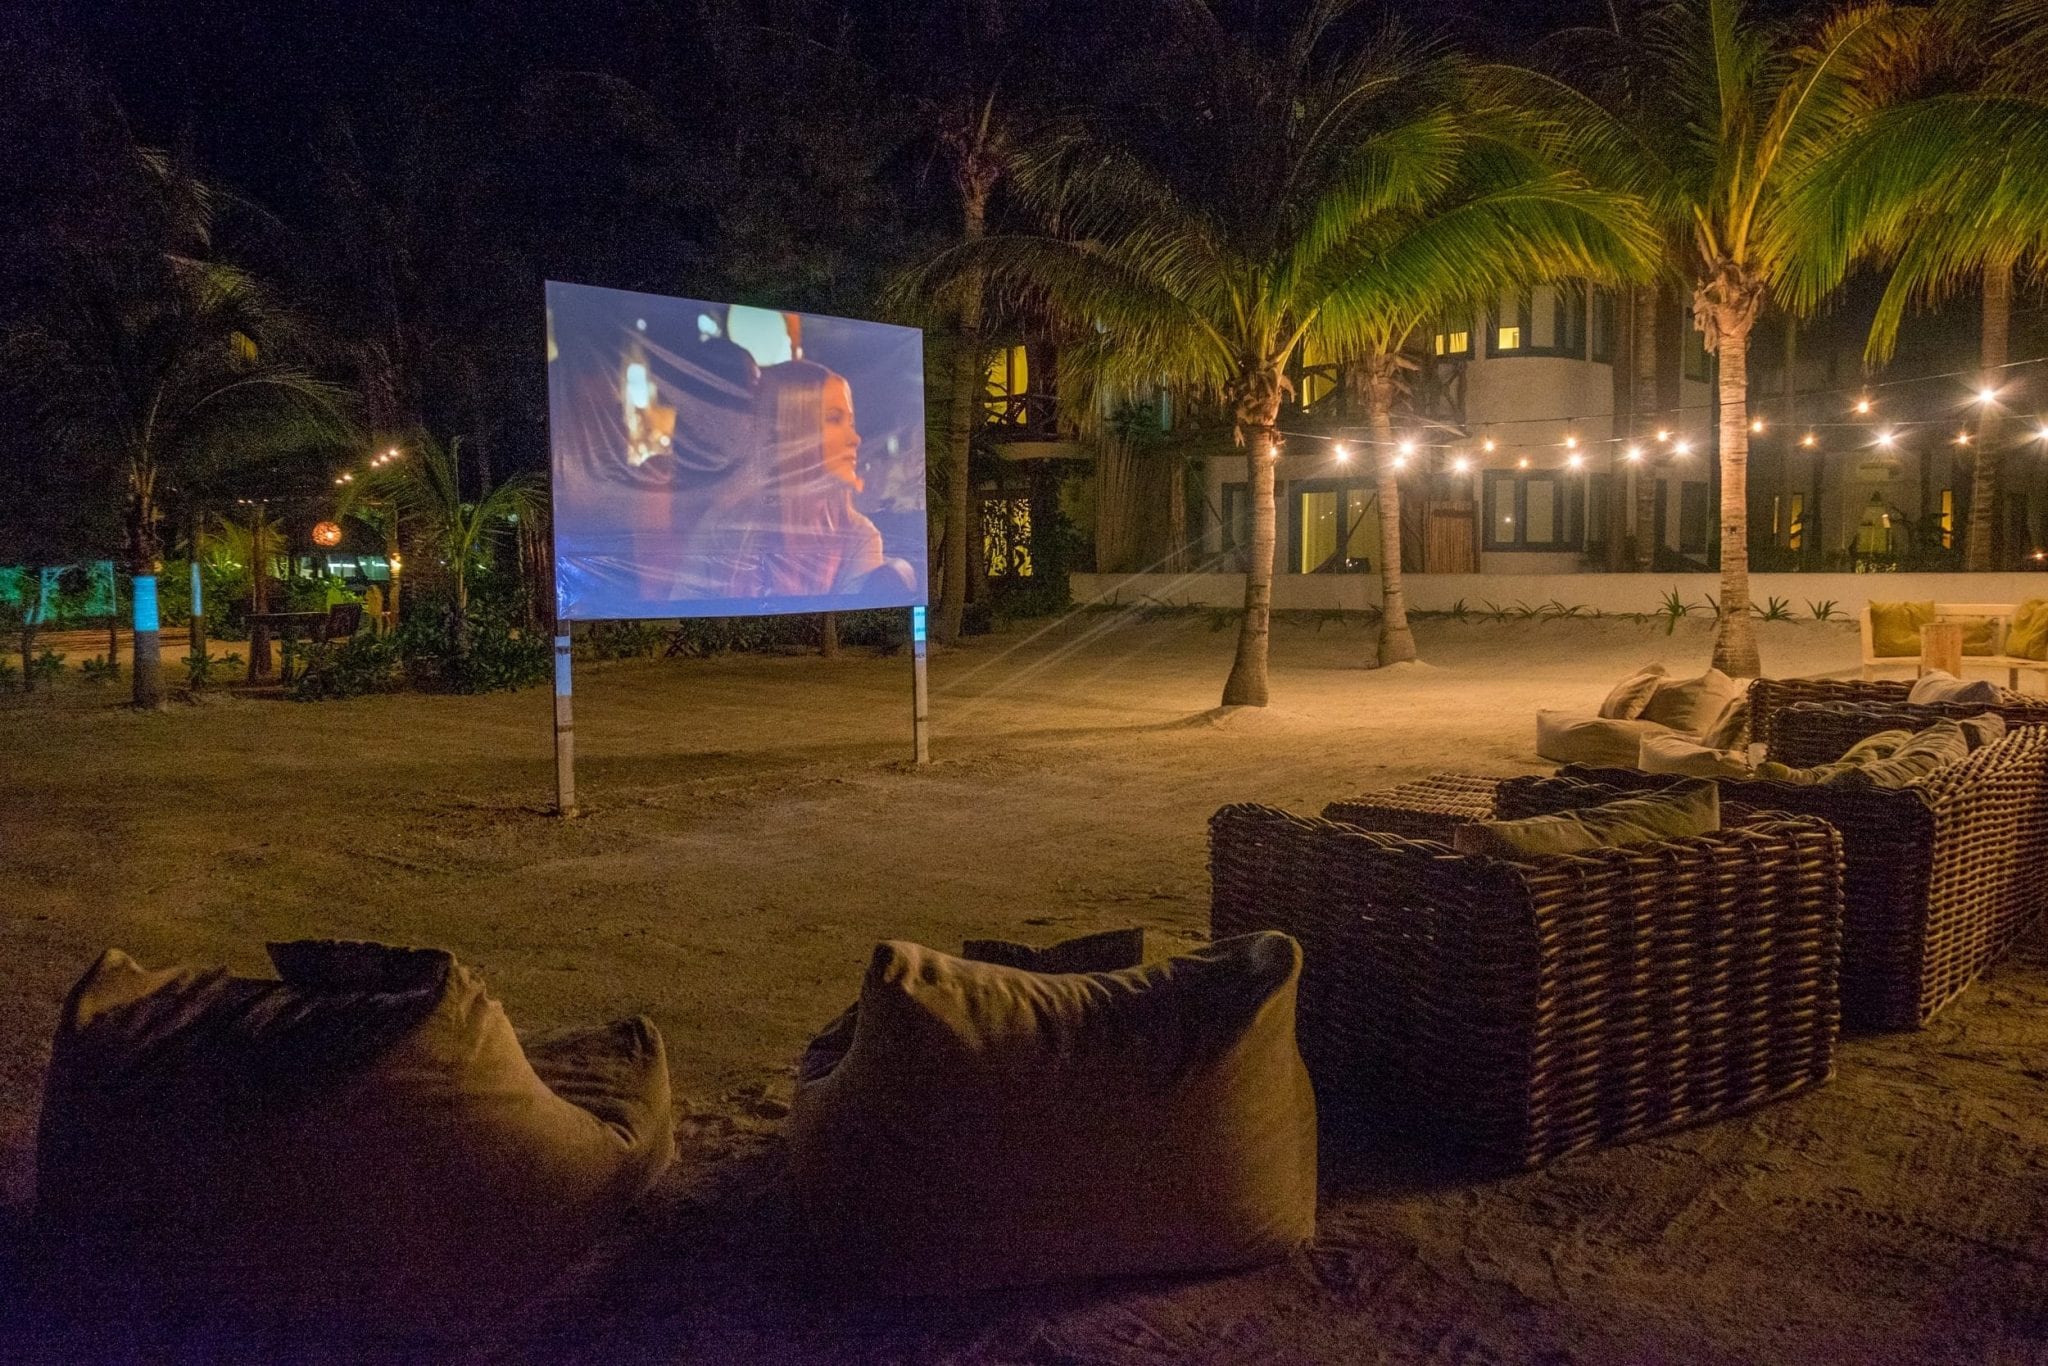 Outdoor movie screening on the beach.